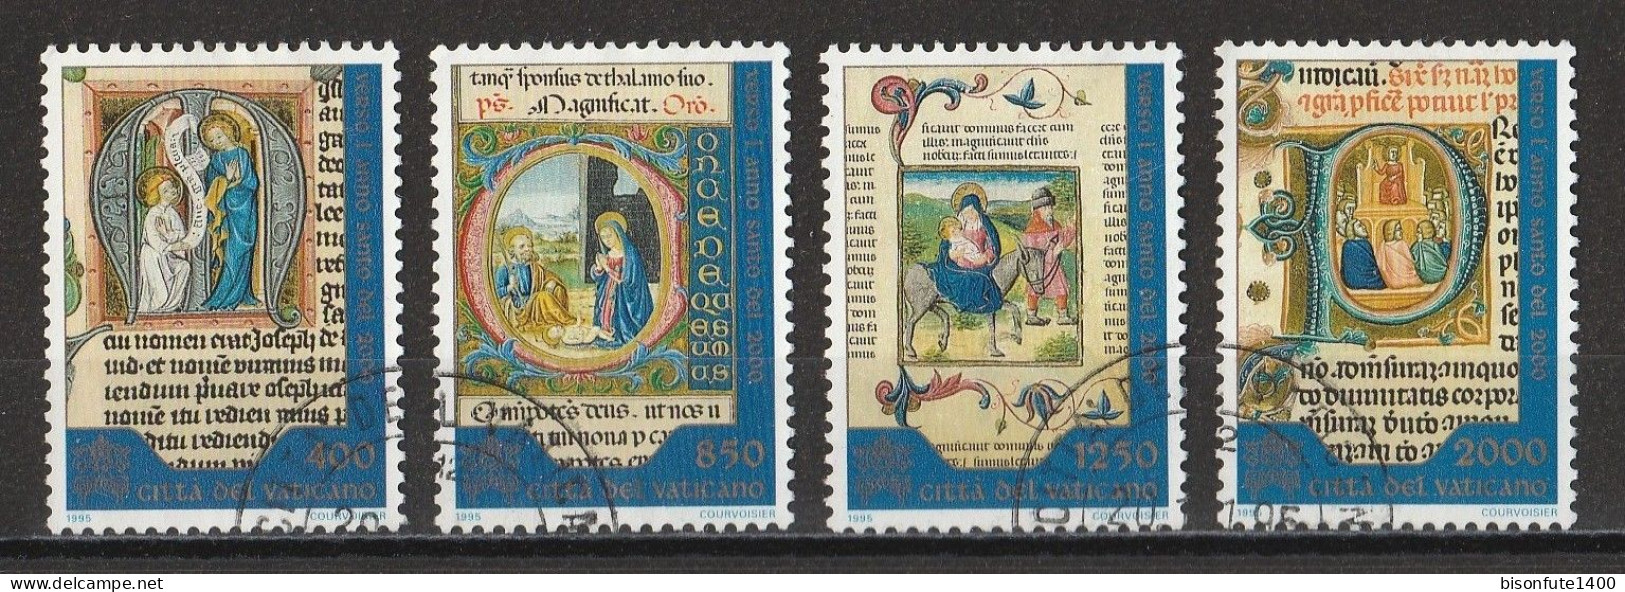 Vatican 1995 : Timbres Yvert & Tellier N° 1025 - 1026 - 1027 Et 1028 Oblitérés - Gebraucht